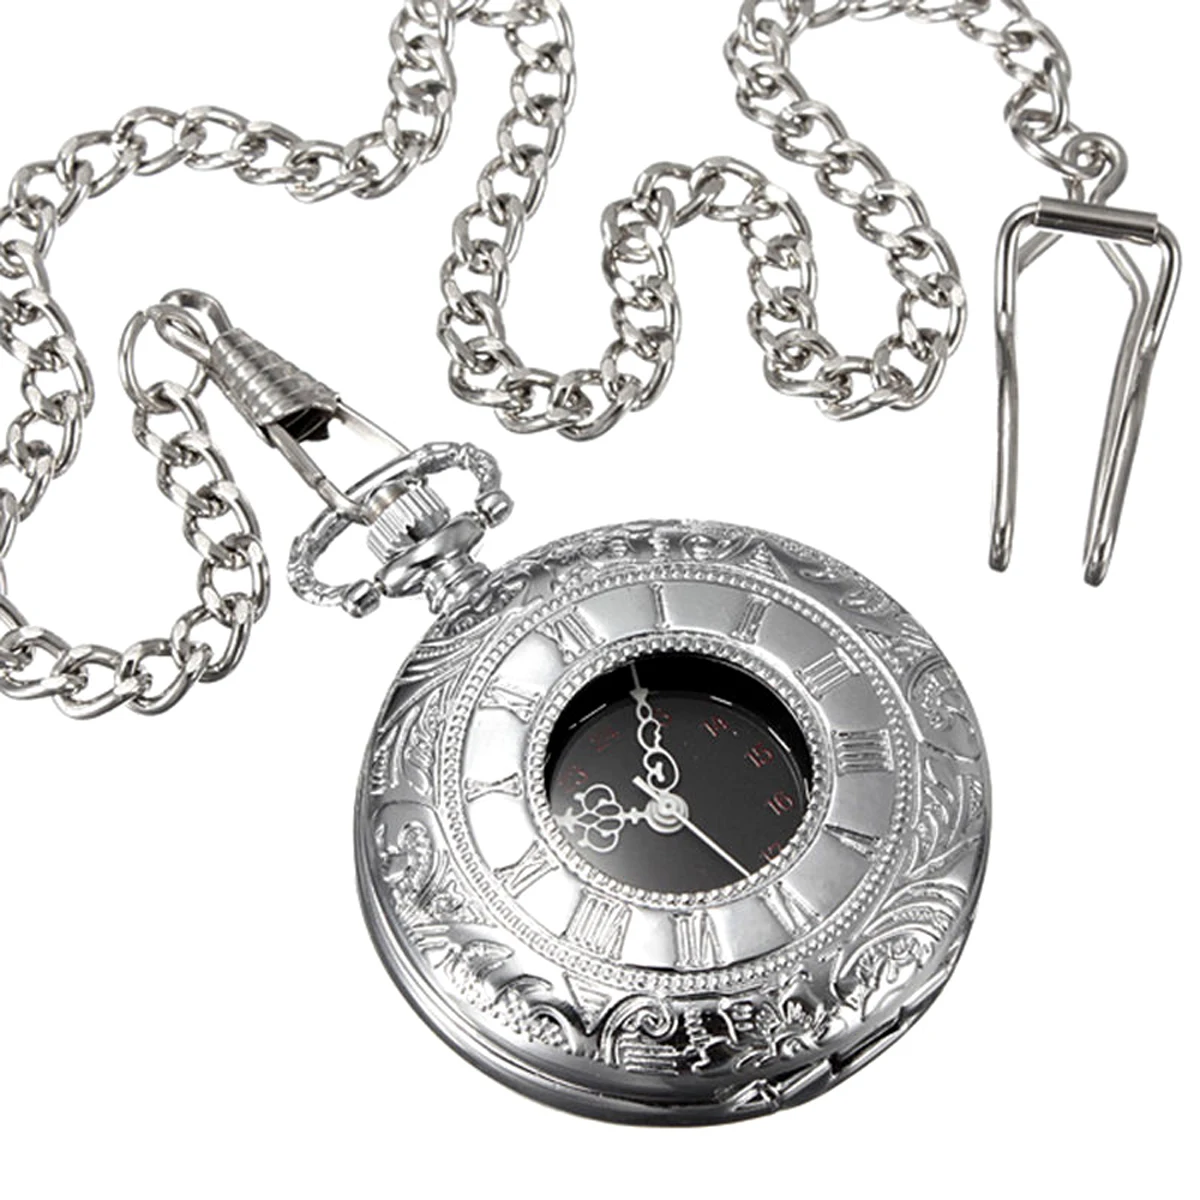 Shellhard New Arrival Vintage Hollow Silver Pendant Fob Pocket Watch Roman Numerals Black Dial Quartz Pocket Watch For Men Women